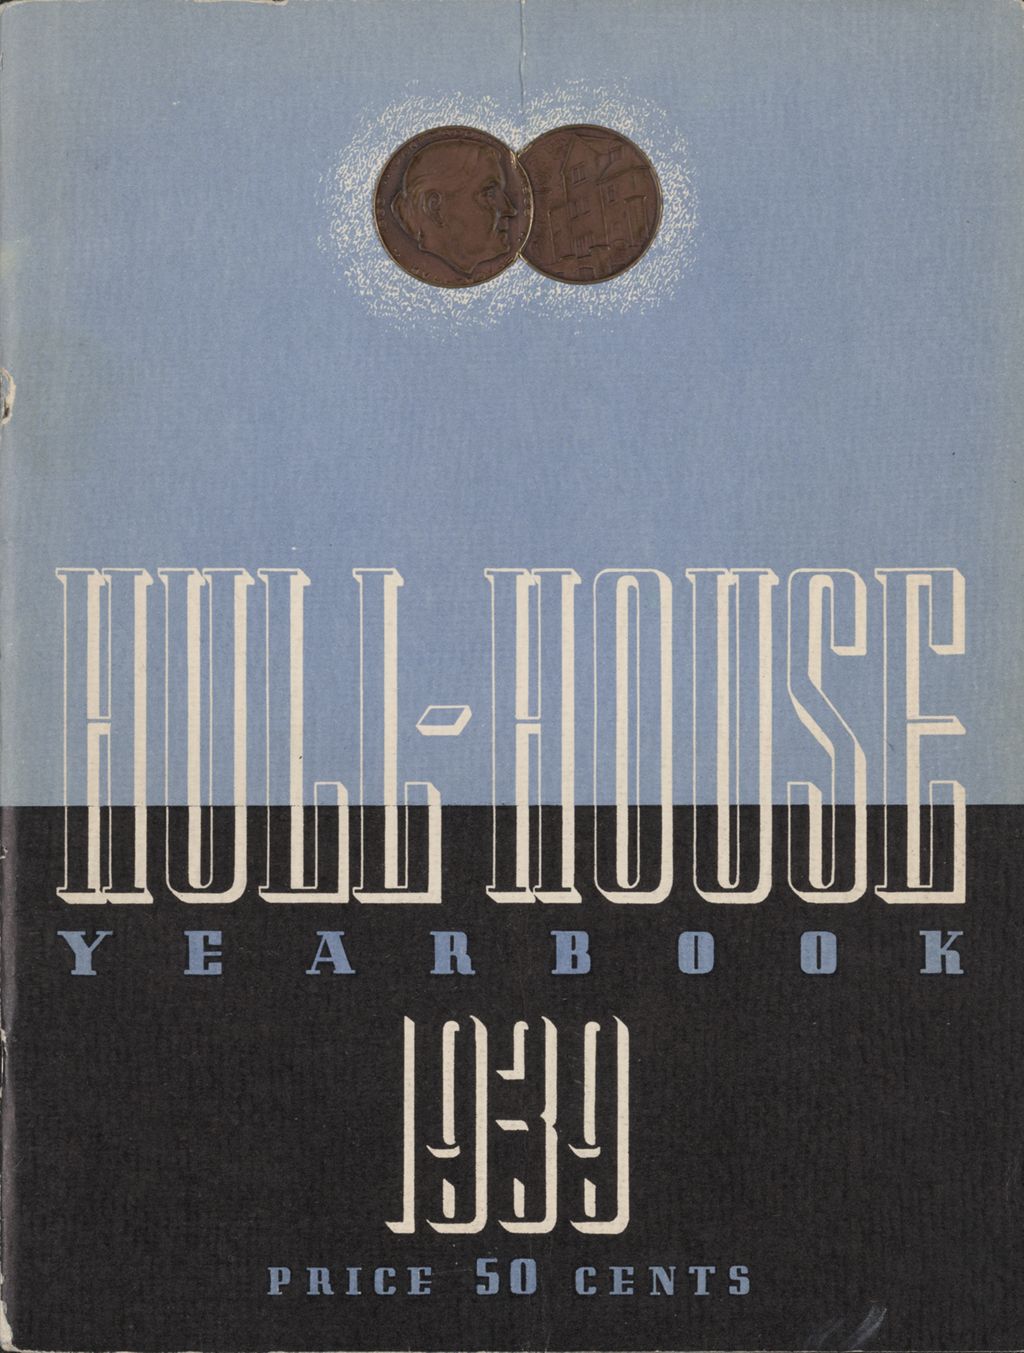 Hull-House Year Book, 1939